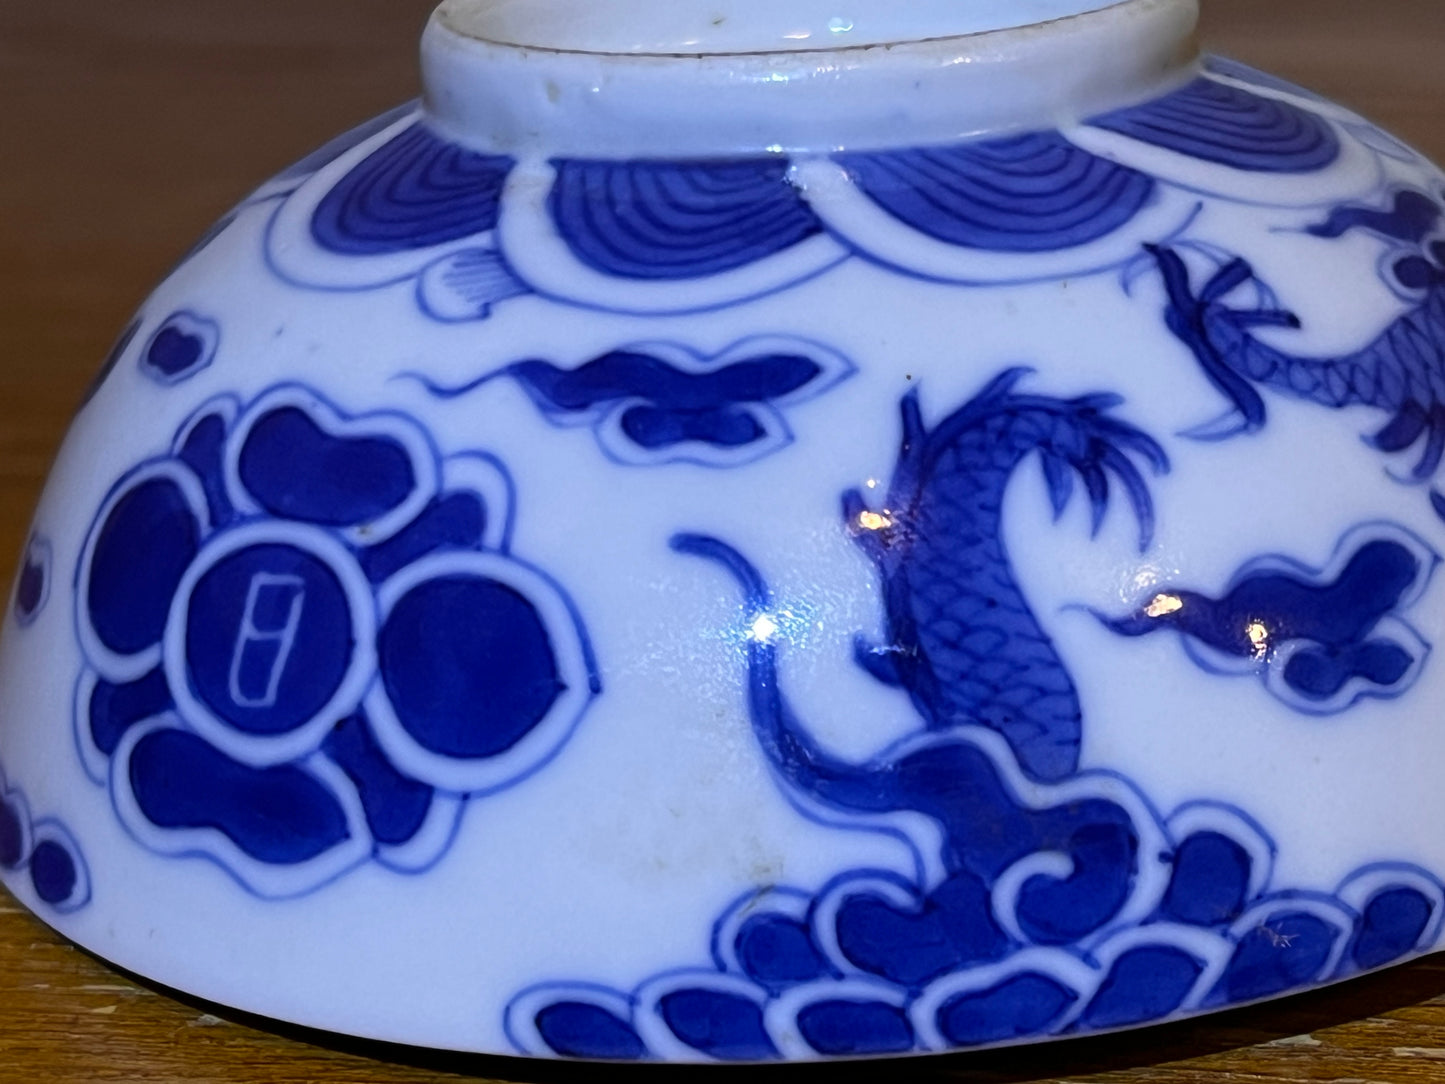 19th C Bleu de Hue Dragon and Horse Porcelain Bowl